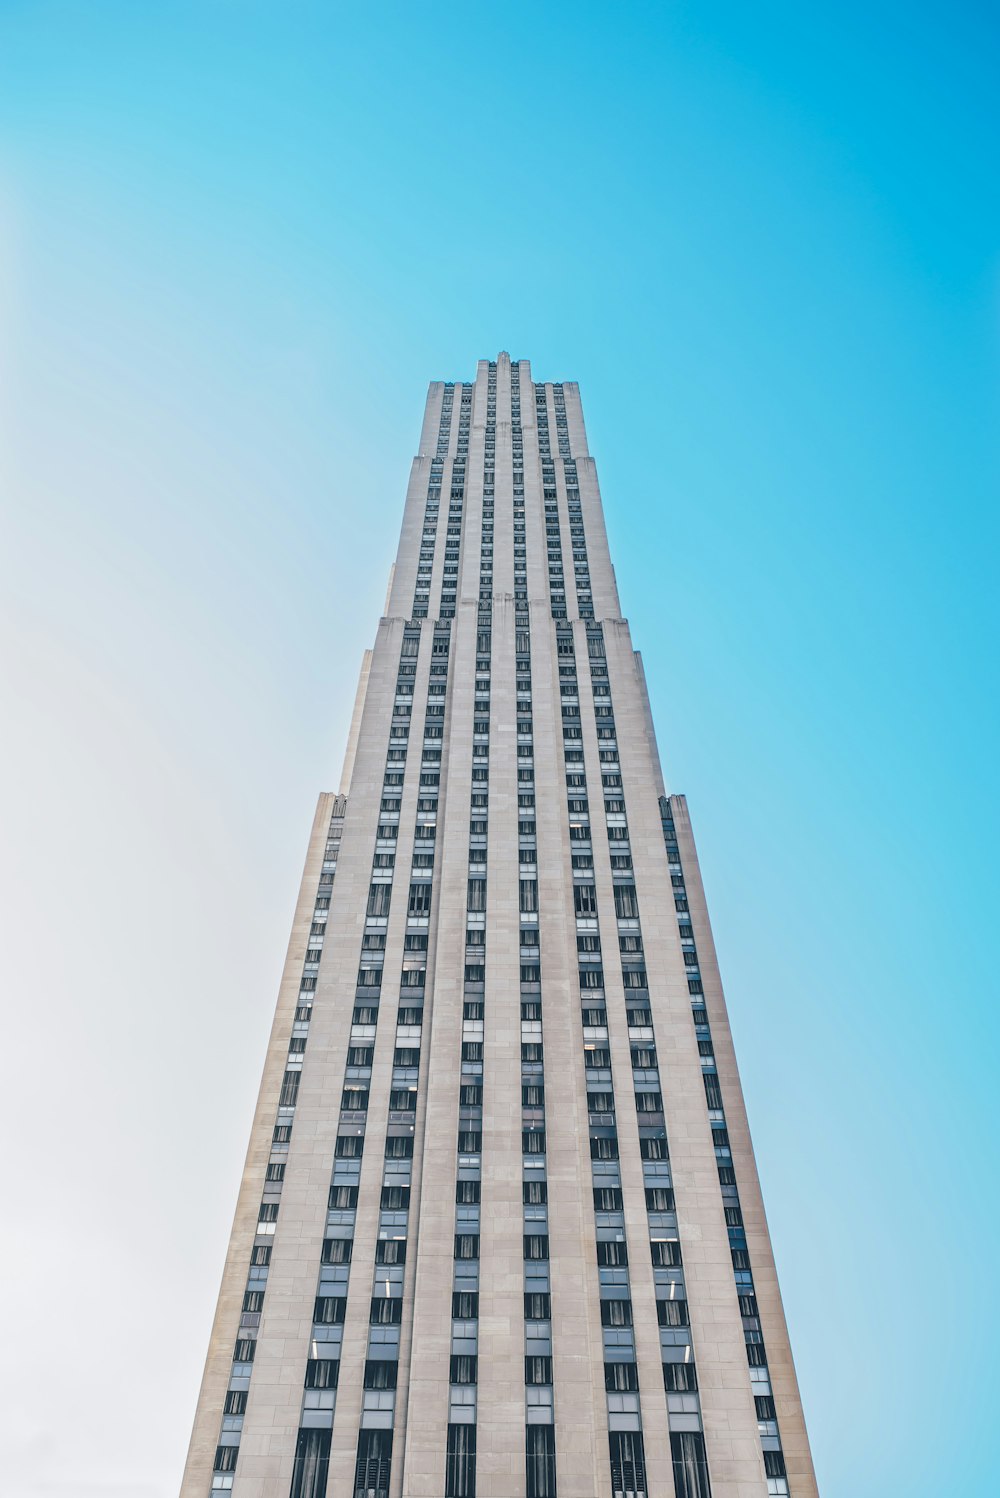 foto de baixo ângulo do edifício de concreto cinza